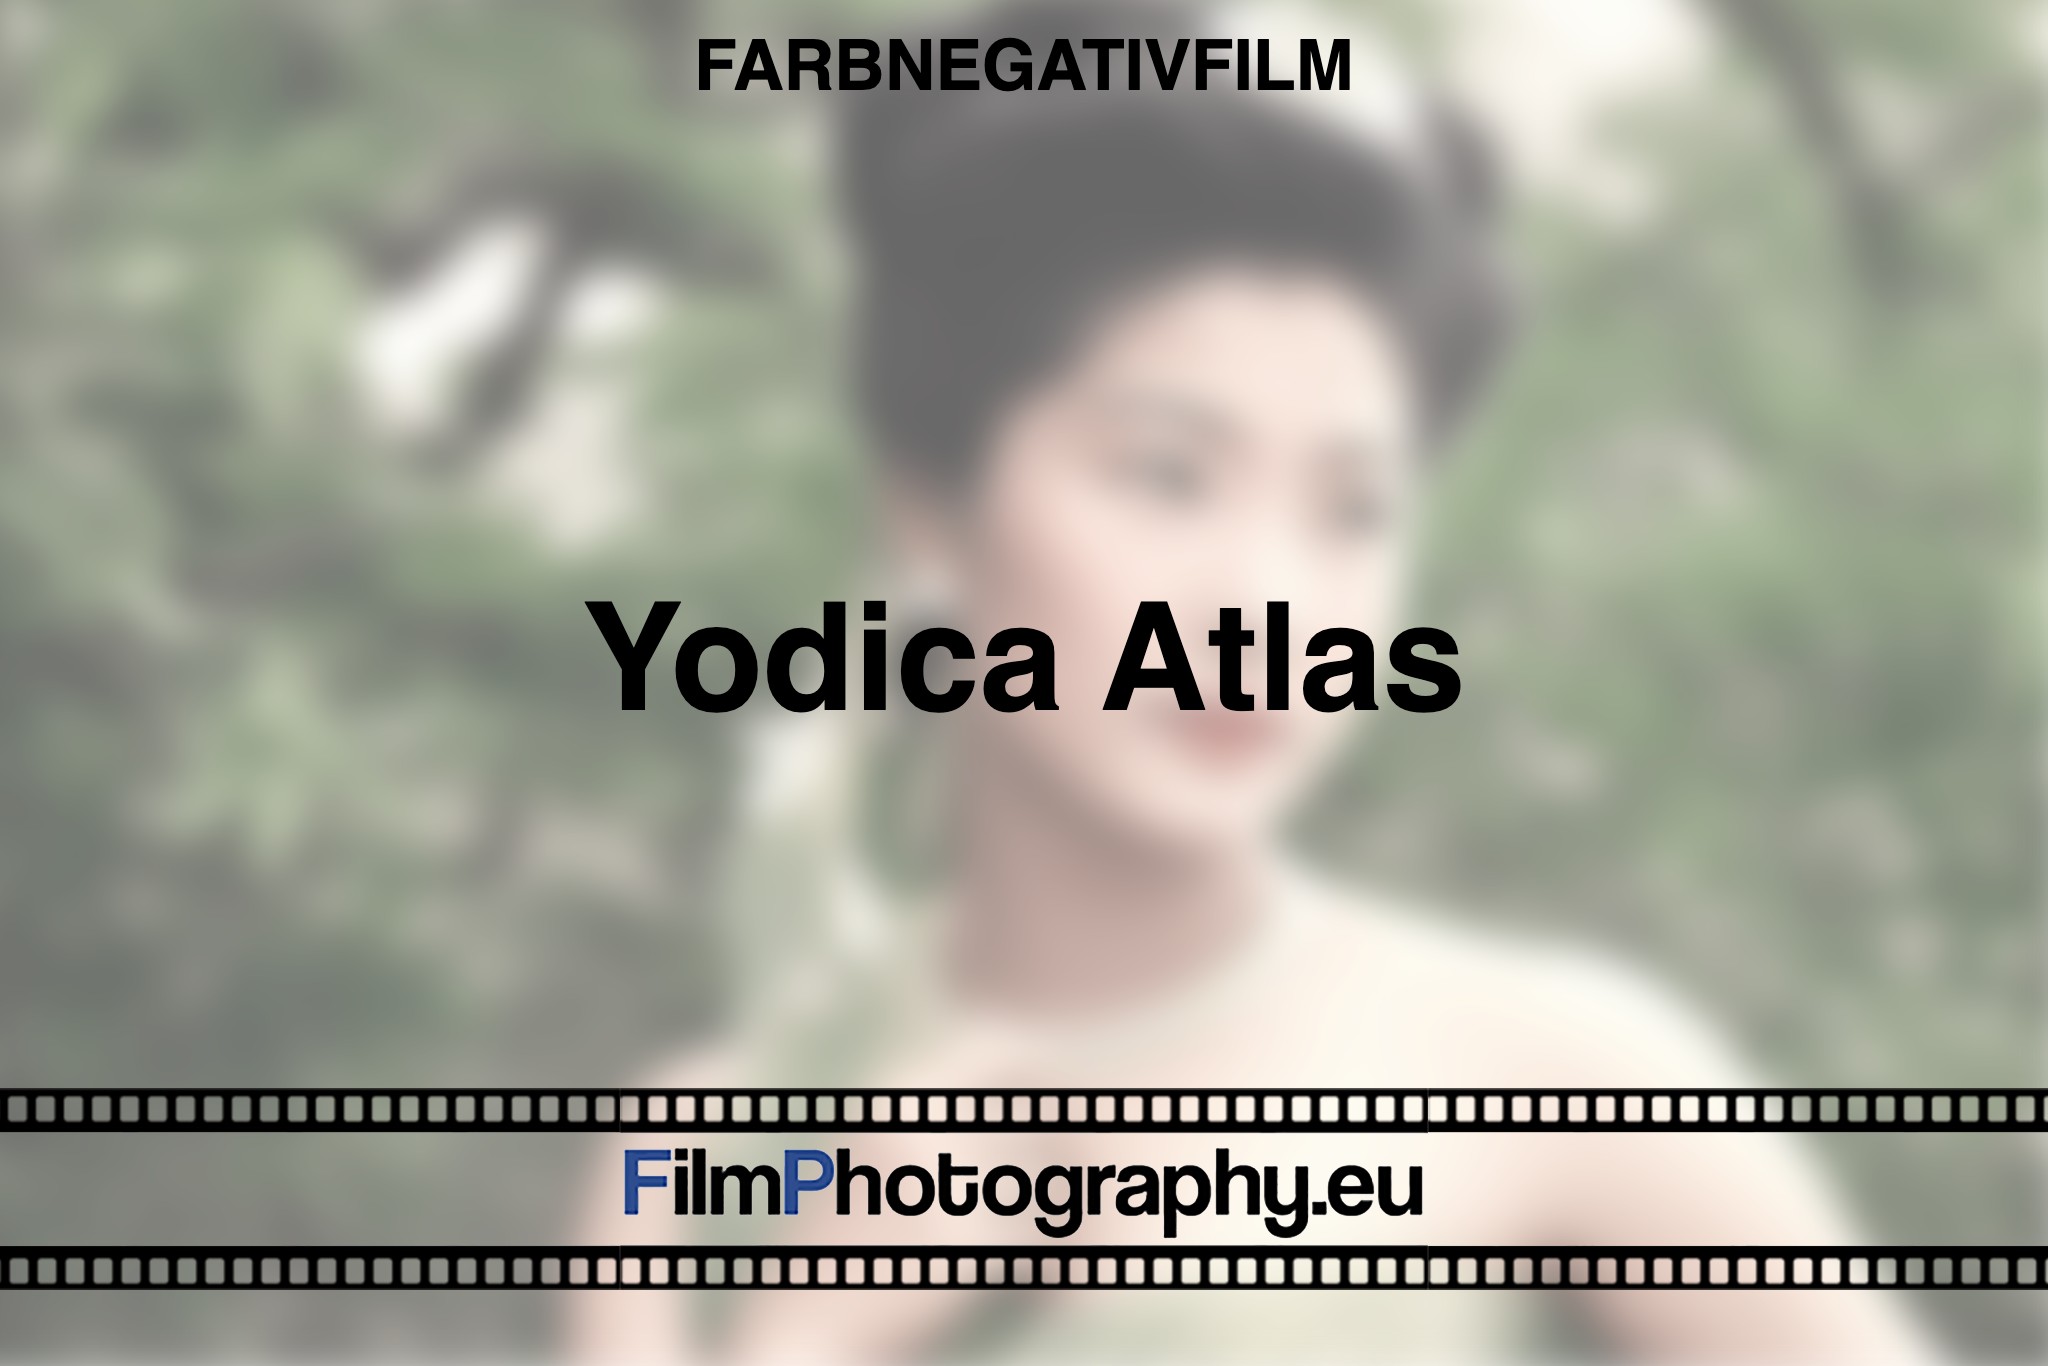 yodica-atlas-farbnegativfilm-bnv